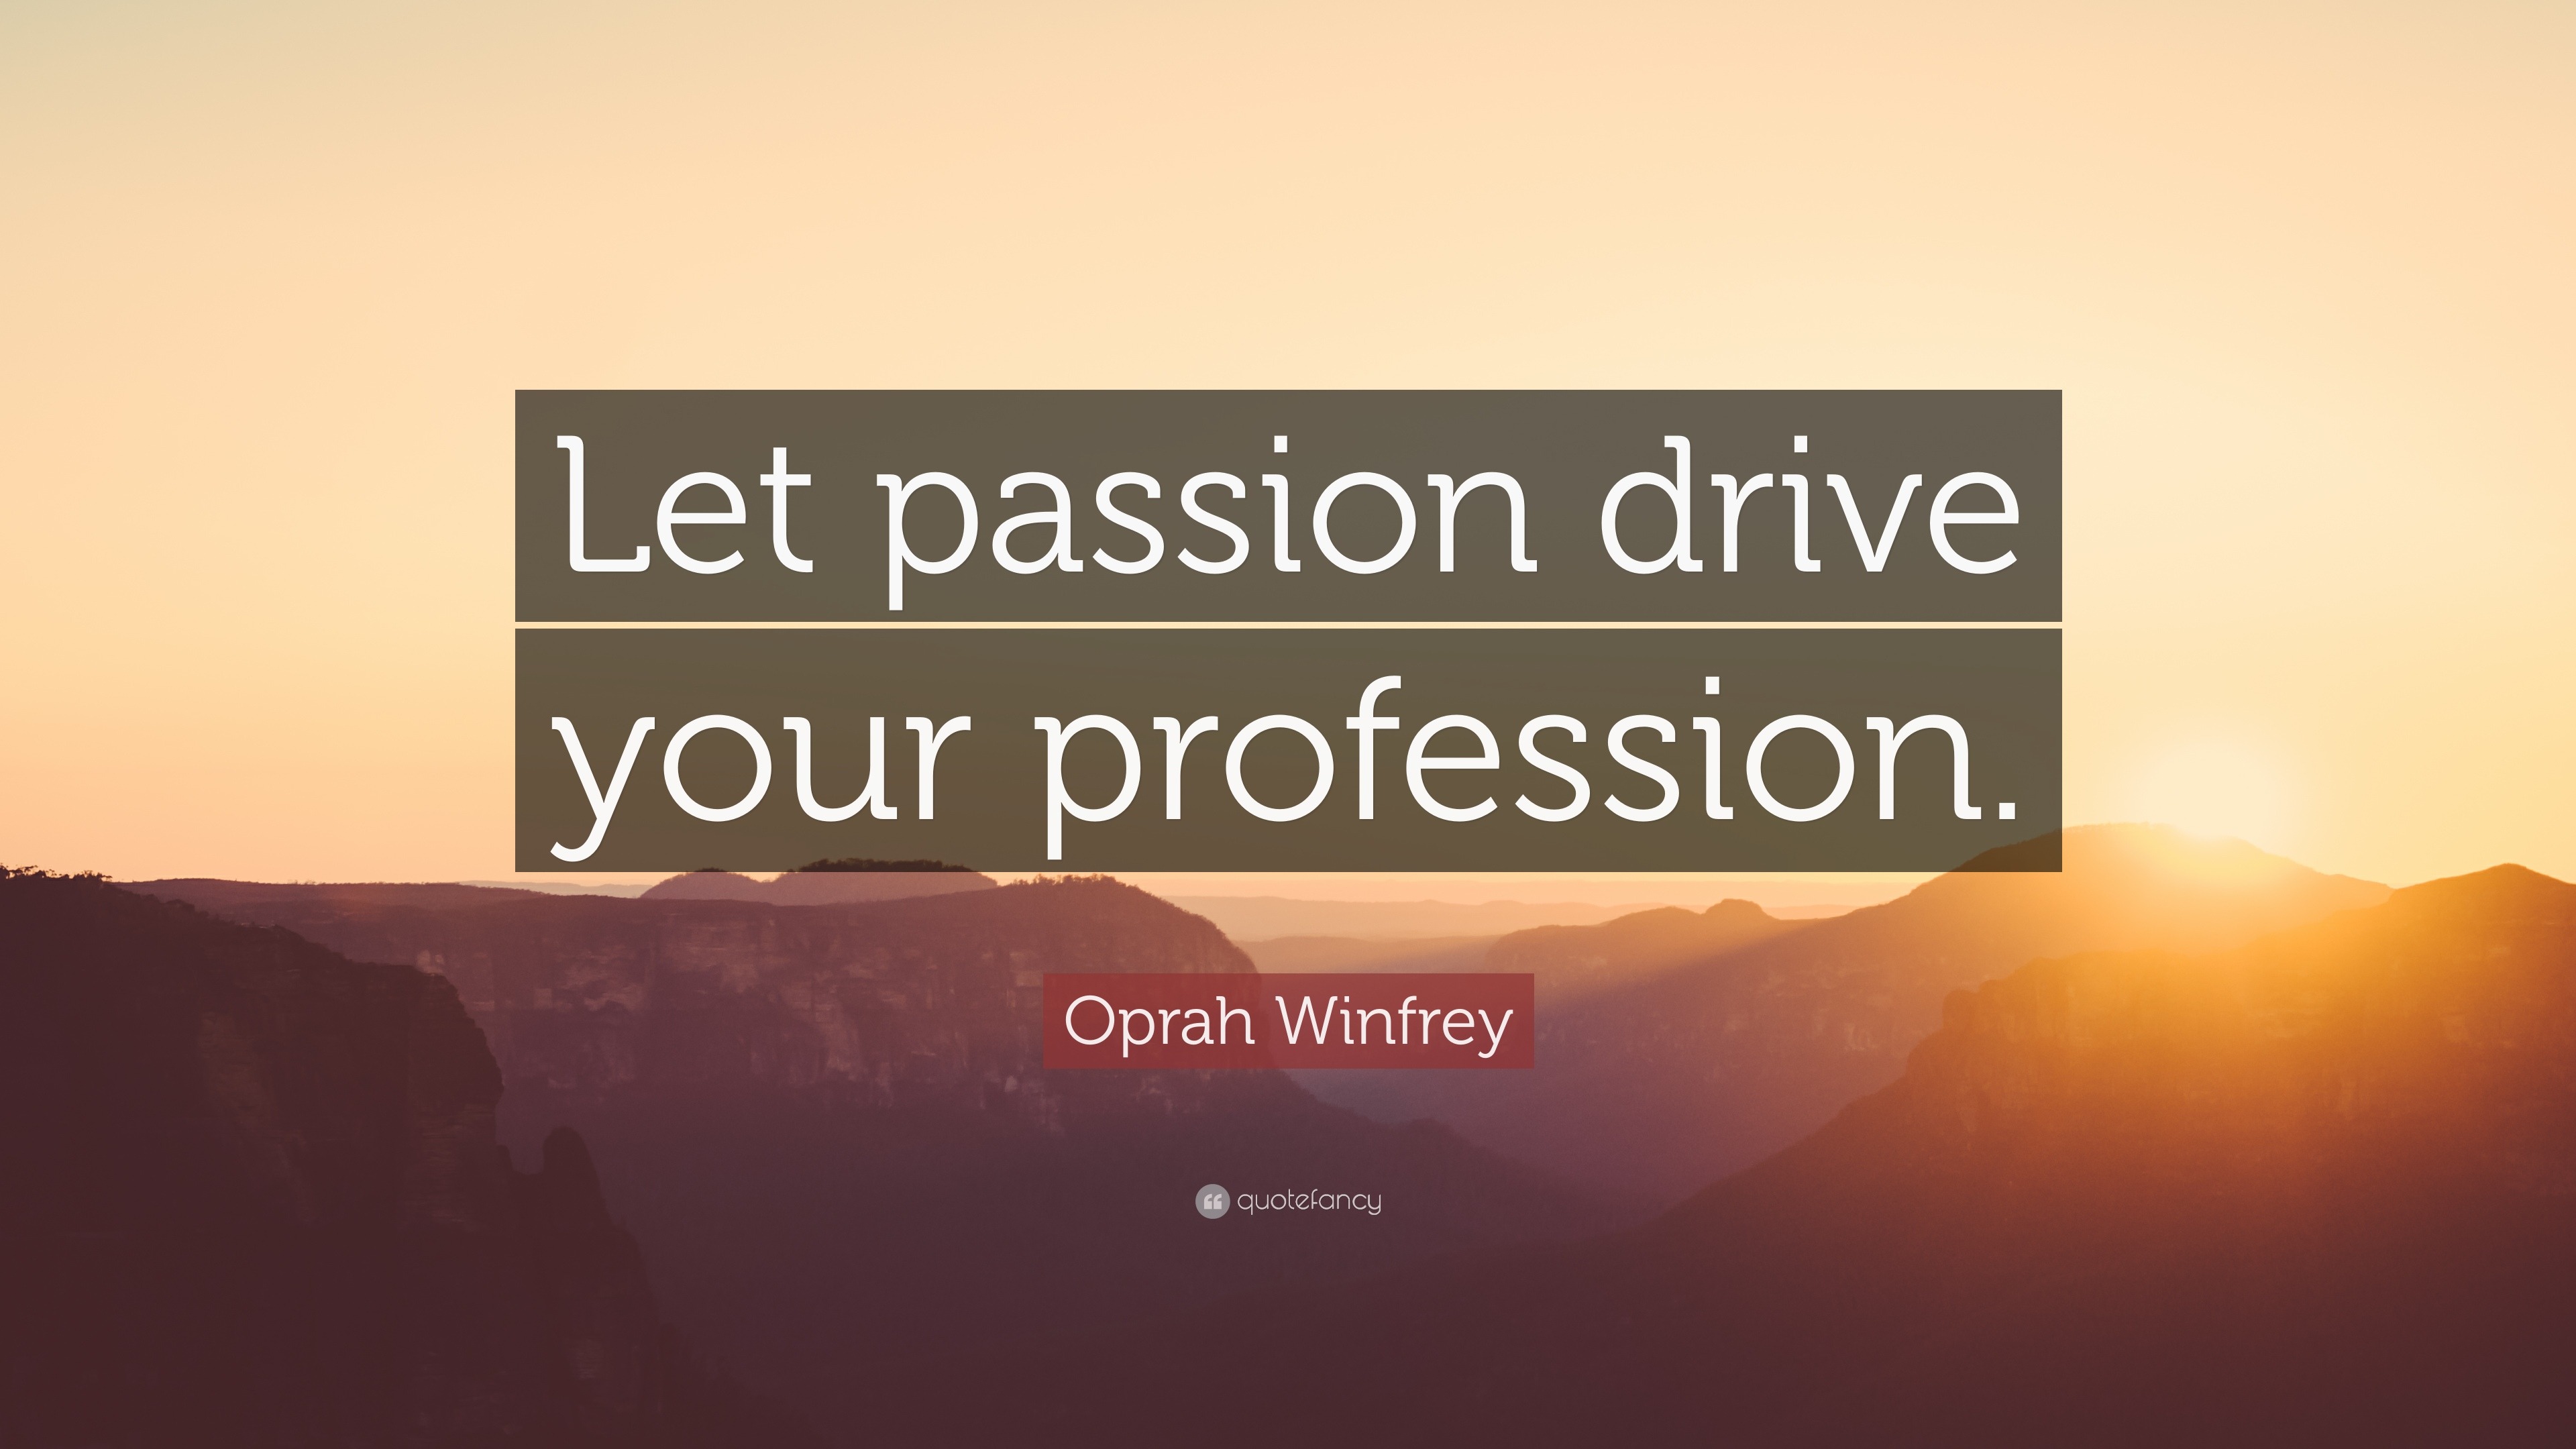 Oprah Winfrey Quote “Let passion drive your profession.”